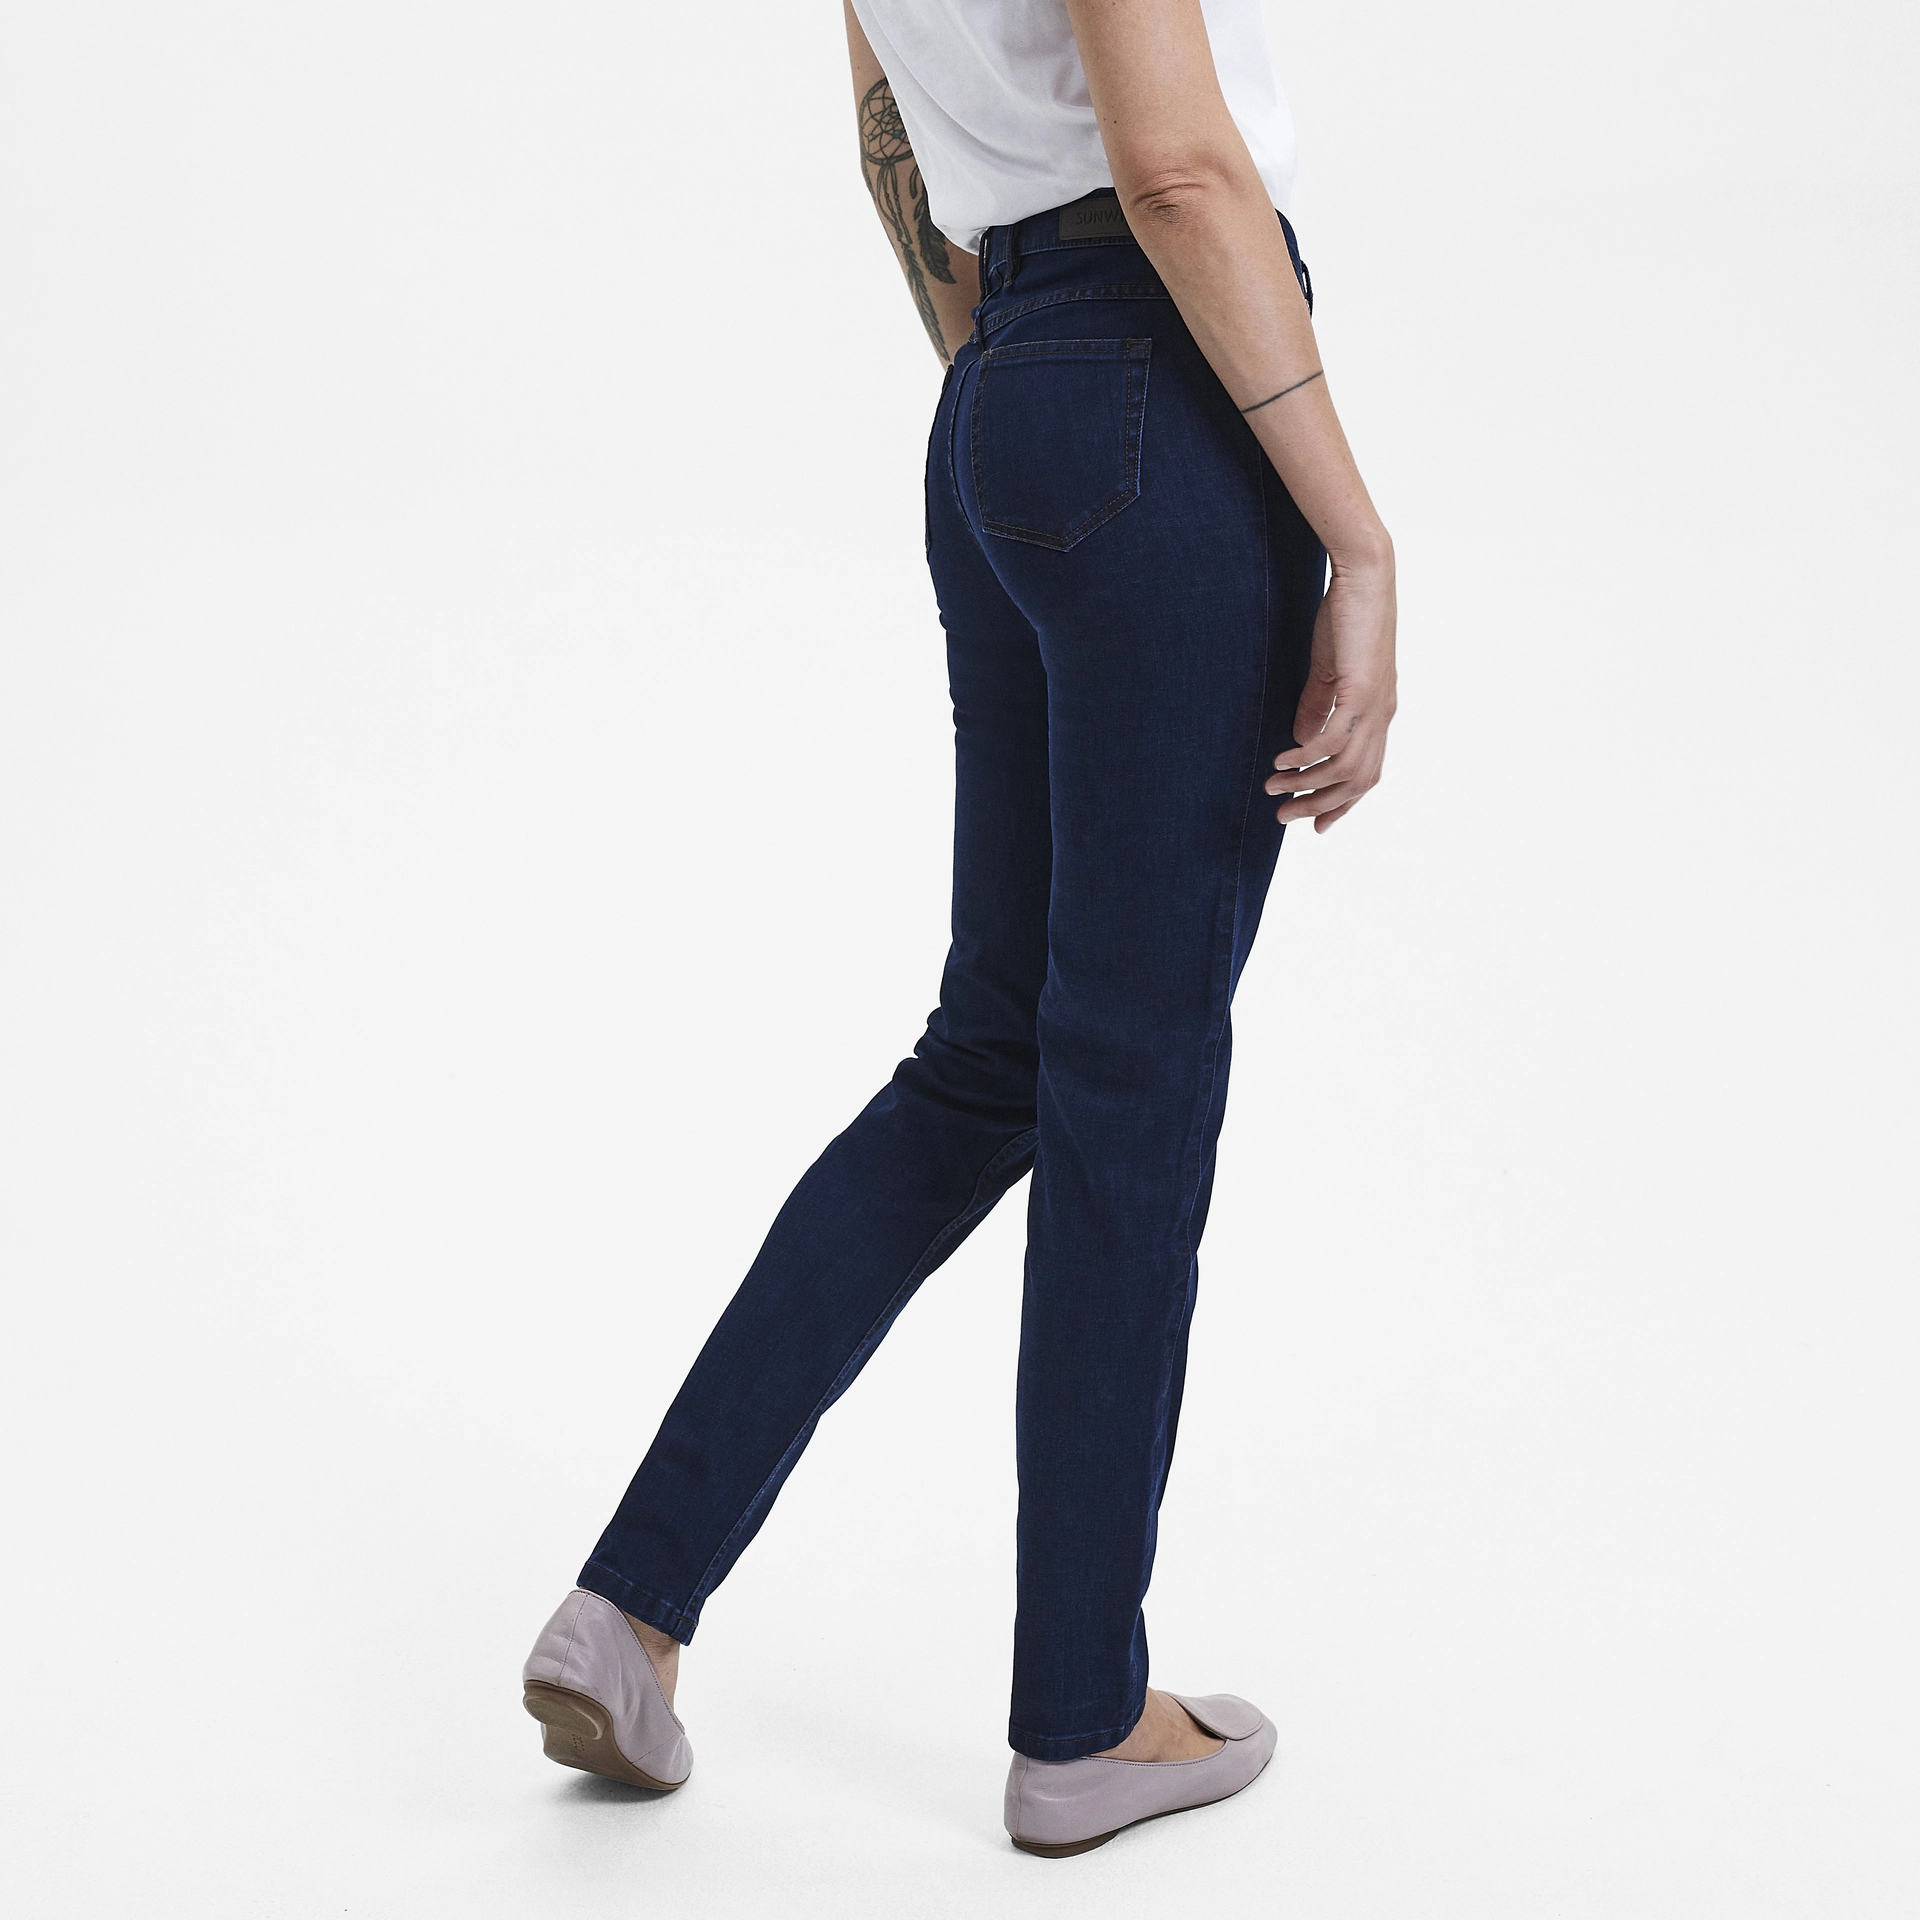 Jeanshose für Damen in Modern Fit